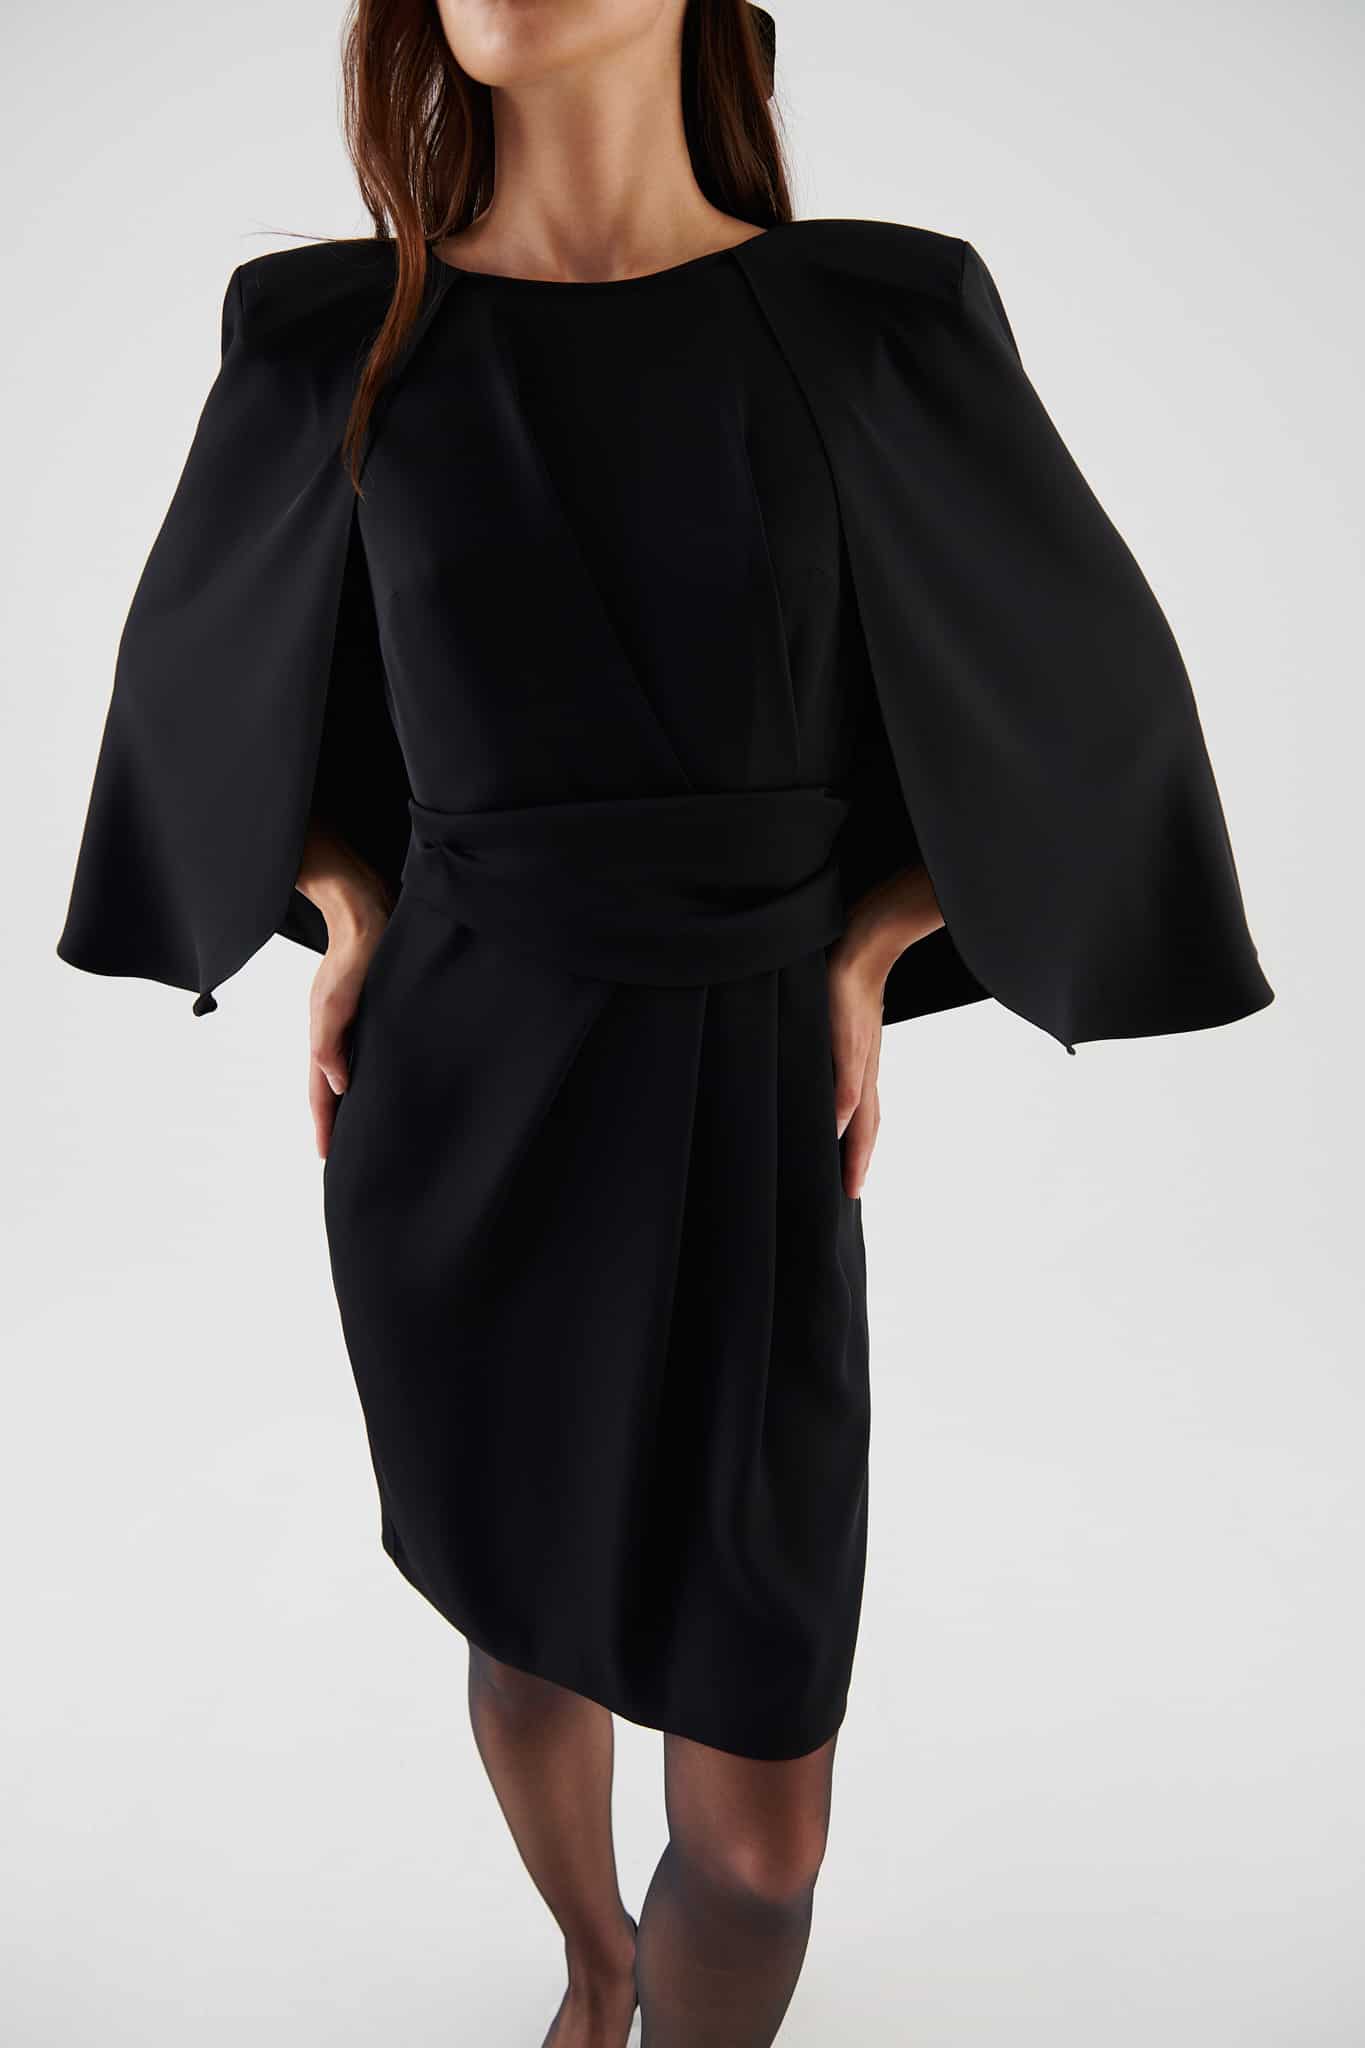 Caped Black Evening Dress--[BLACK]